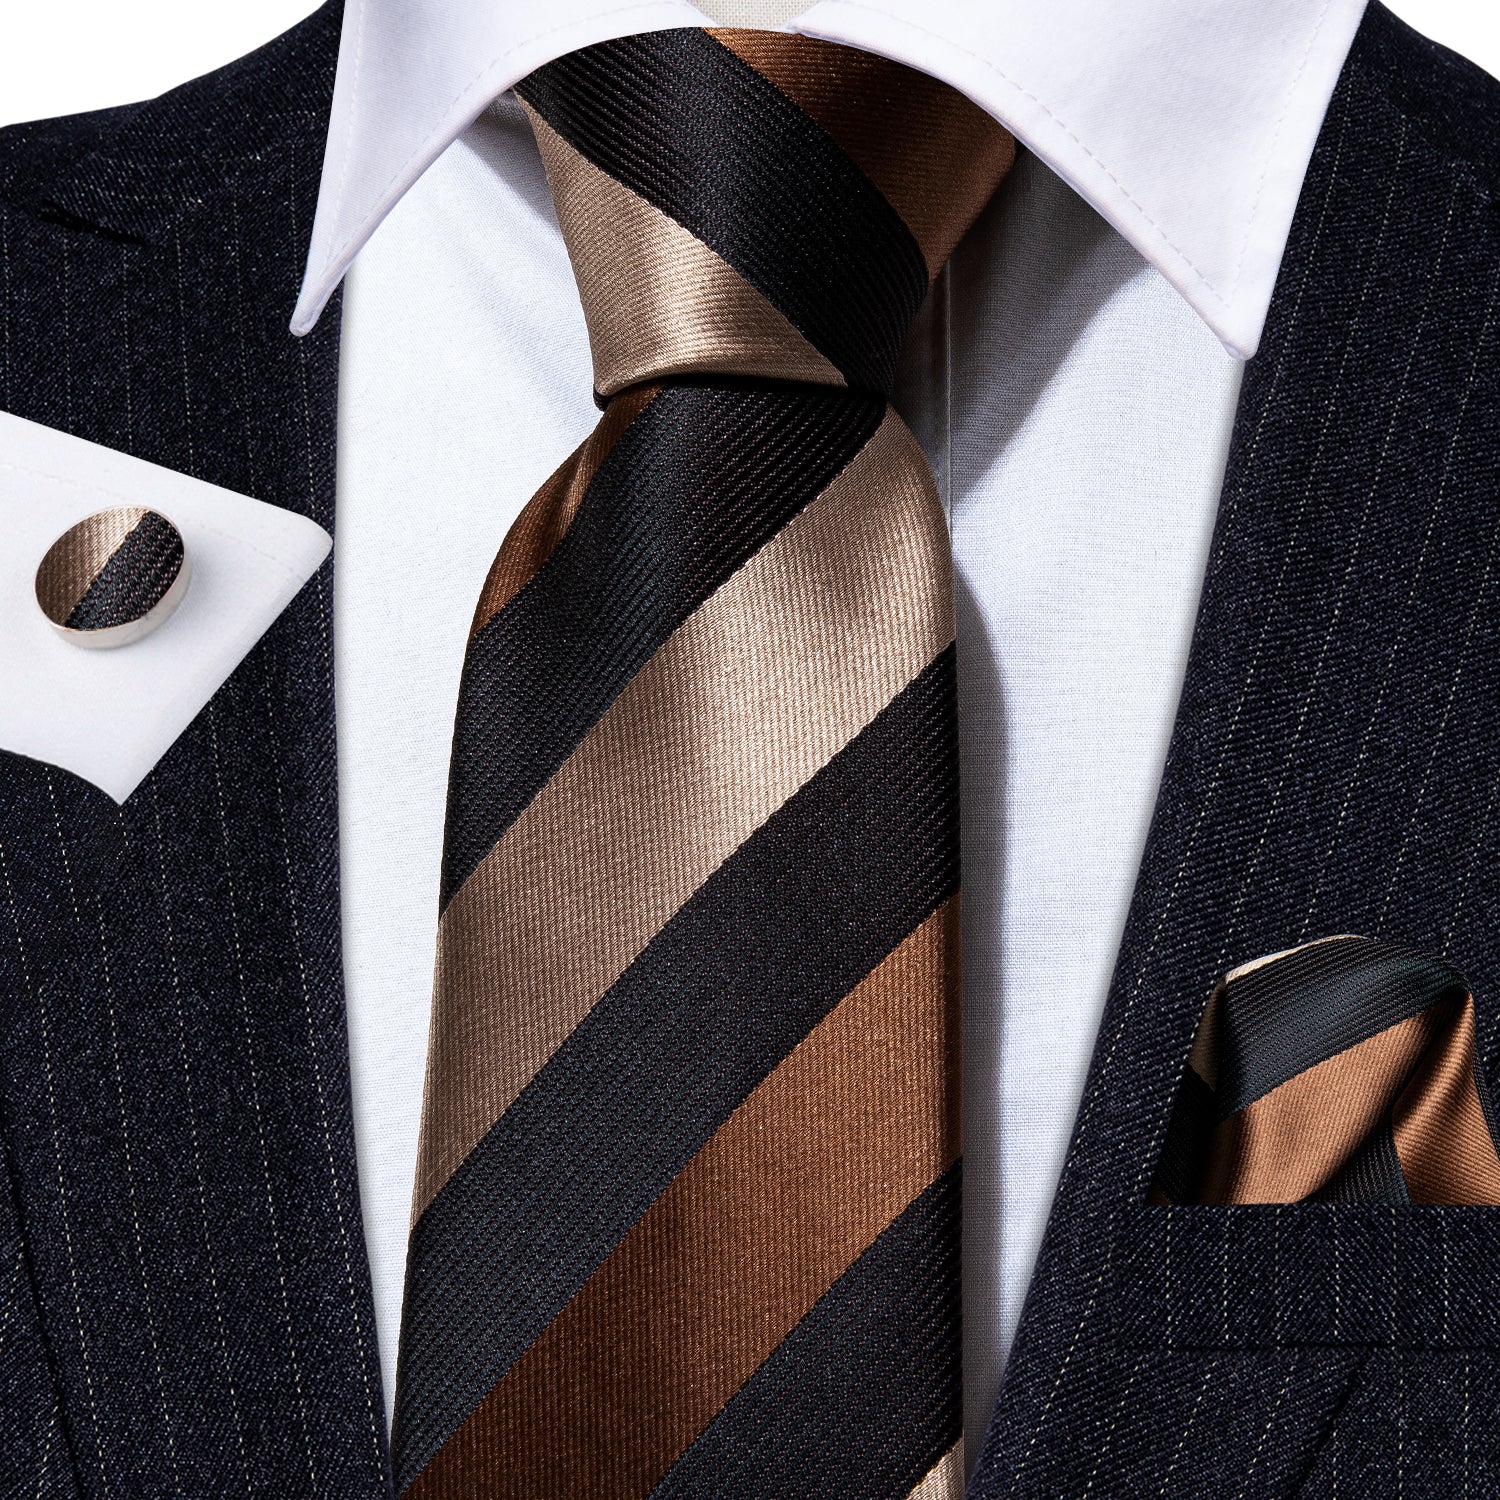 Silver Brown Black Striped Silk Men's Tie Pocket Square Cufflinks Set